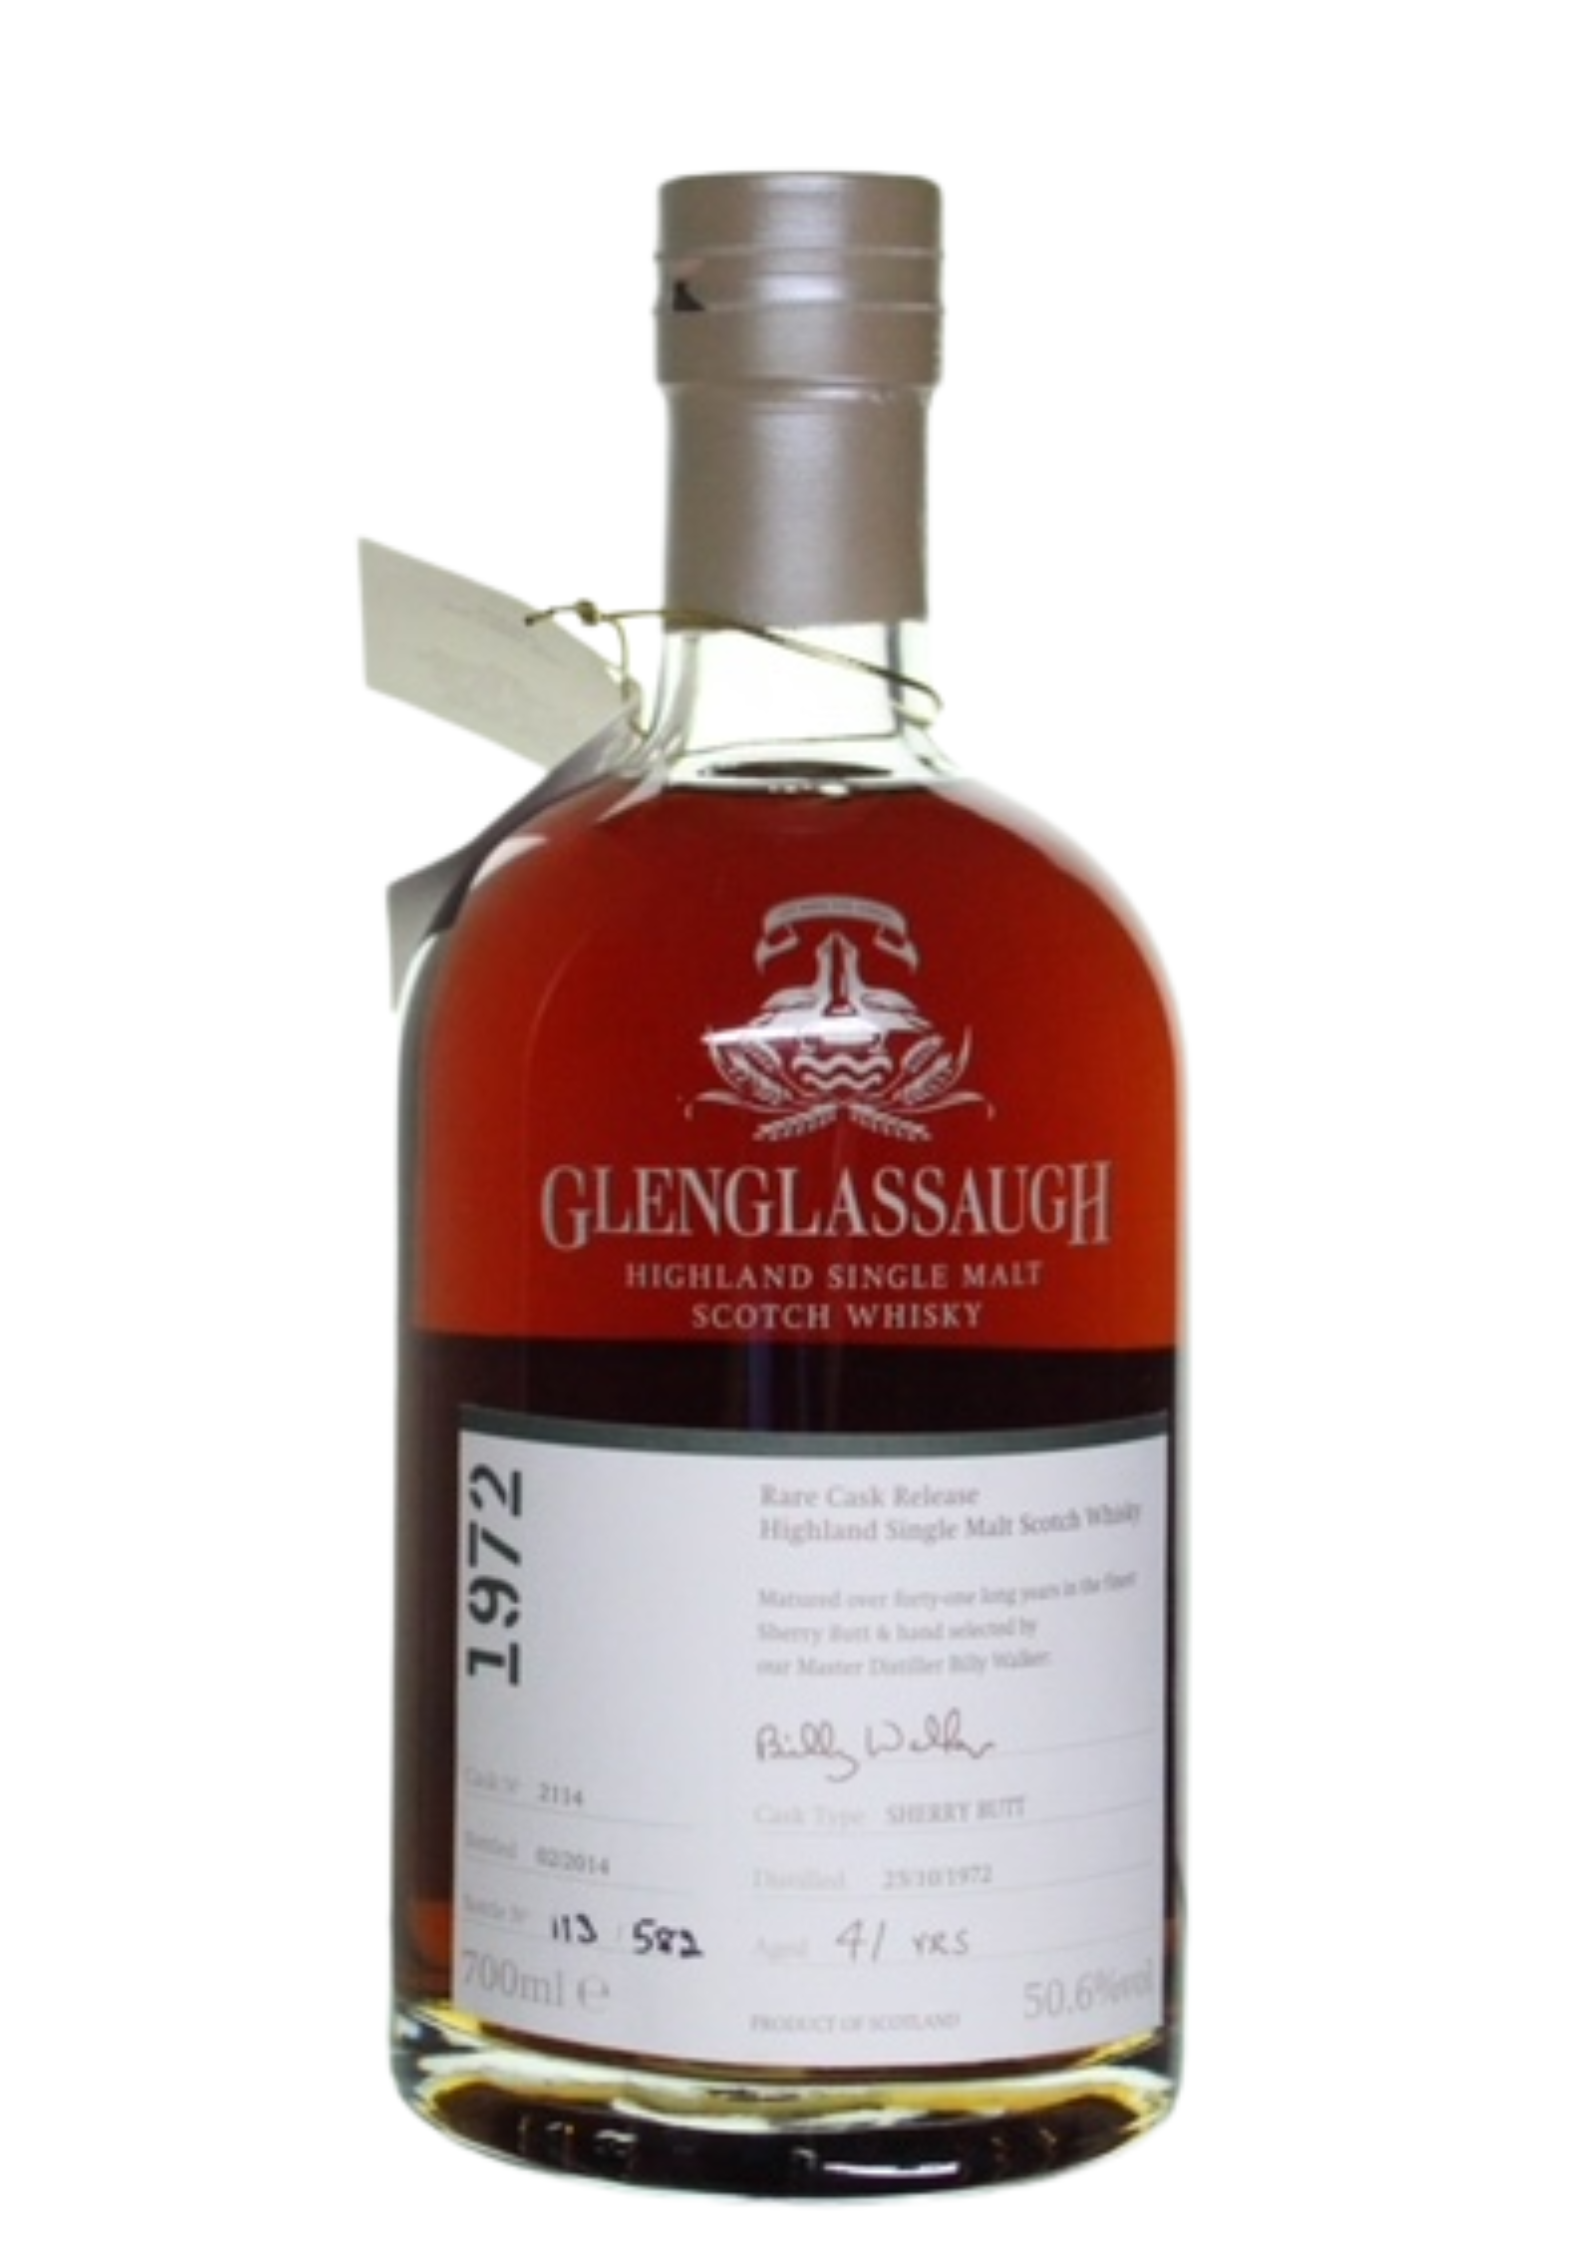 Bottle of 1972 Glenglassaugh Rare Cask Release, #2114, 41-Year-Old Highland Single Malt Whisky, 50.6% - The Spirits Room